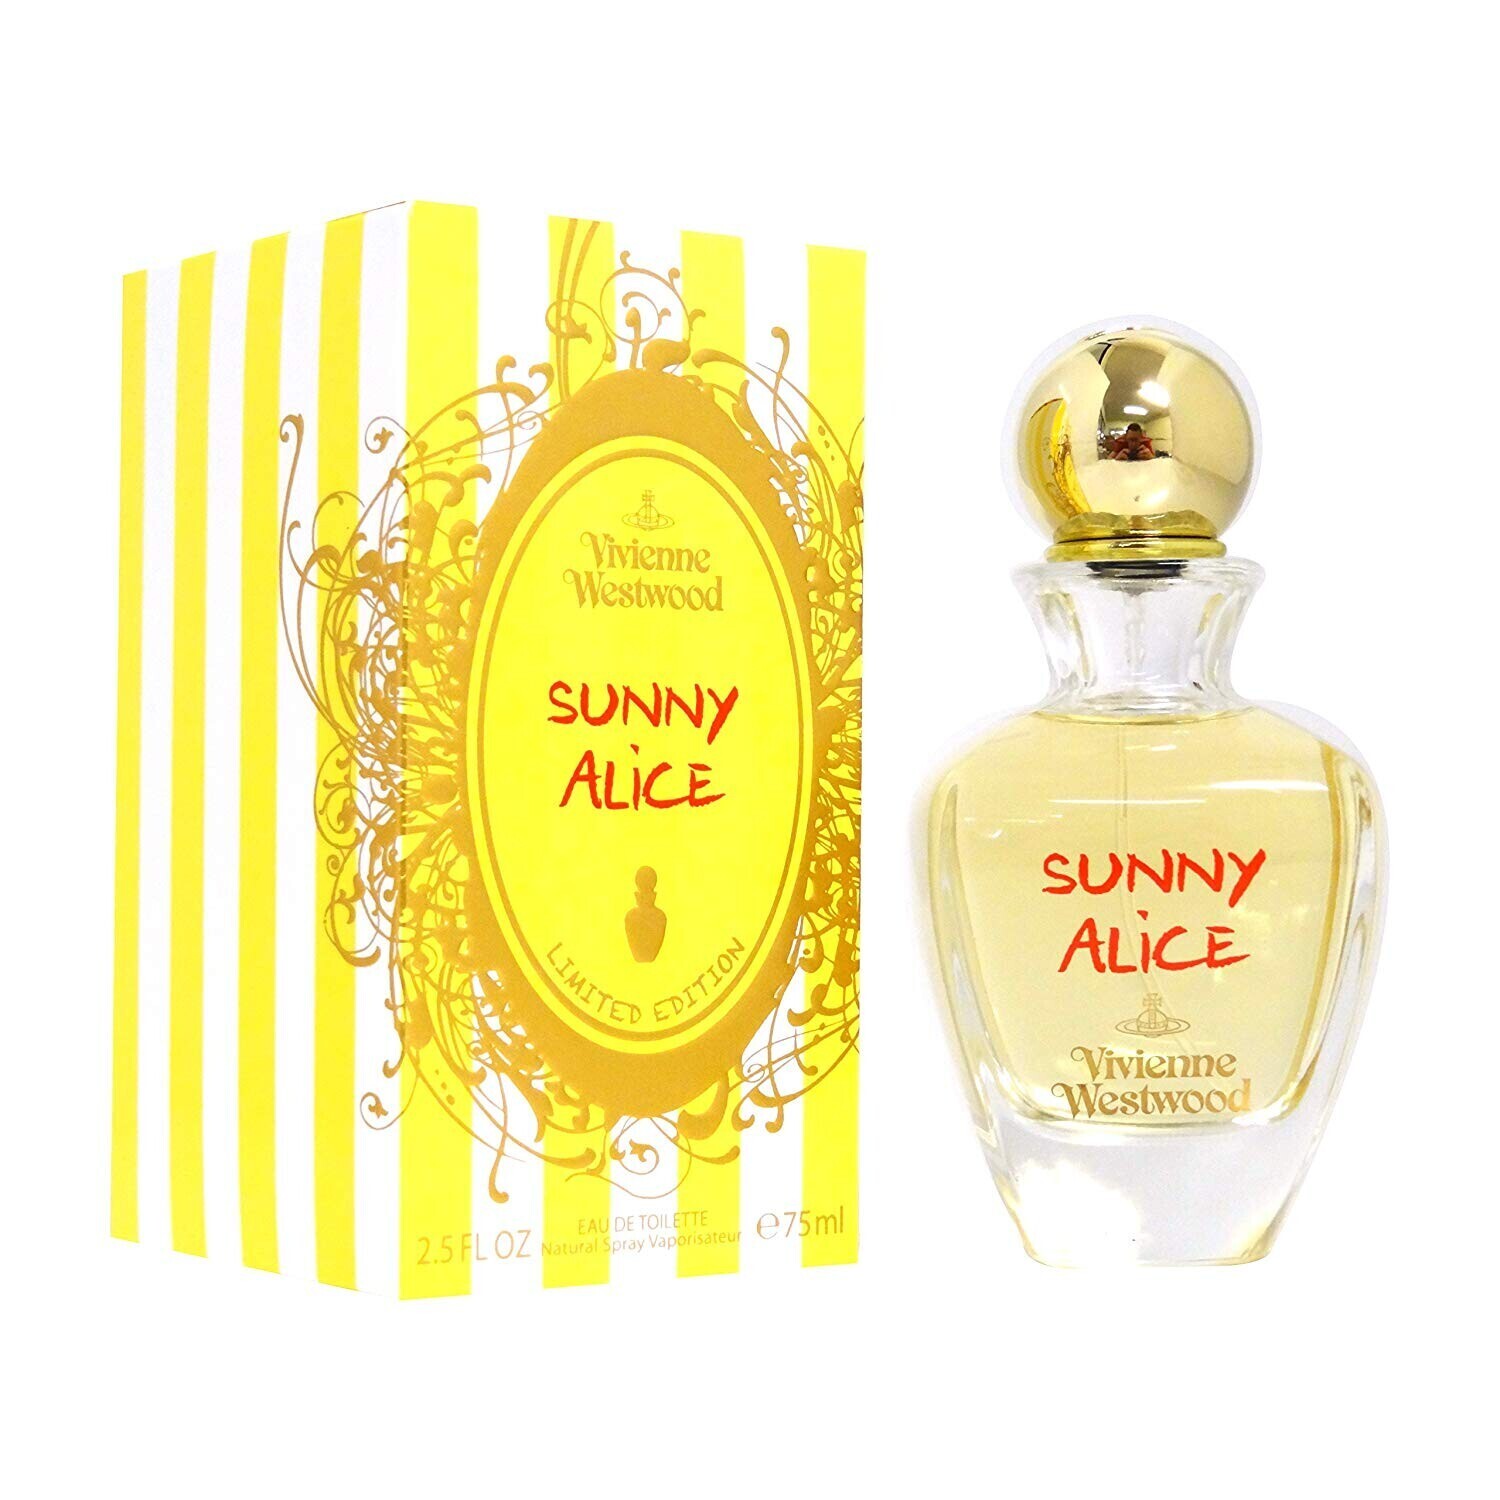 Sunny Alice - запах будущего лета от Vivienne Westwood